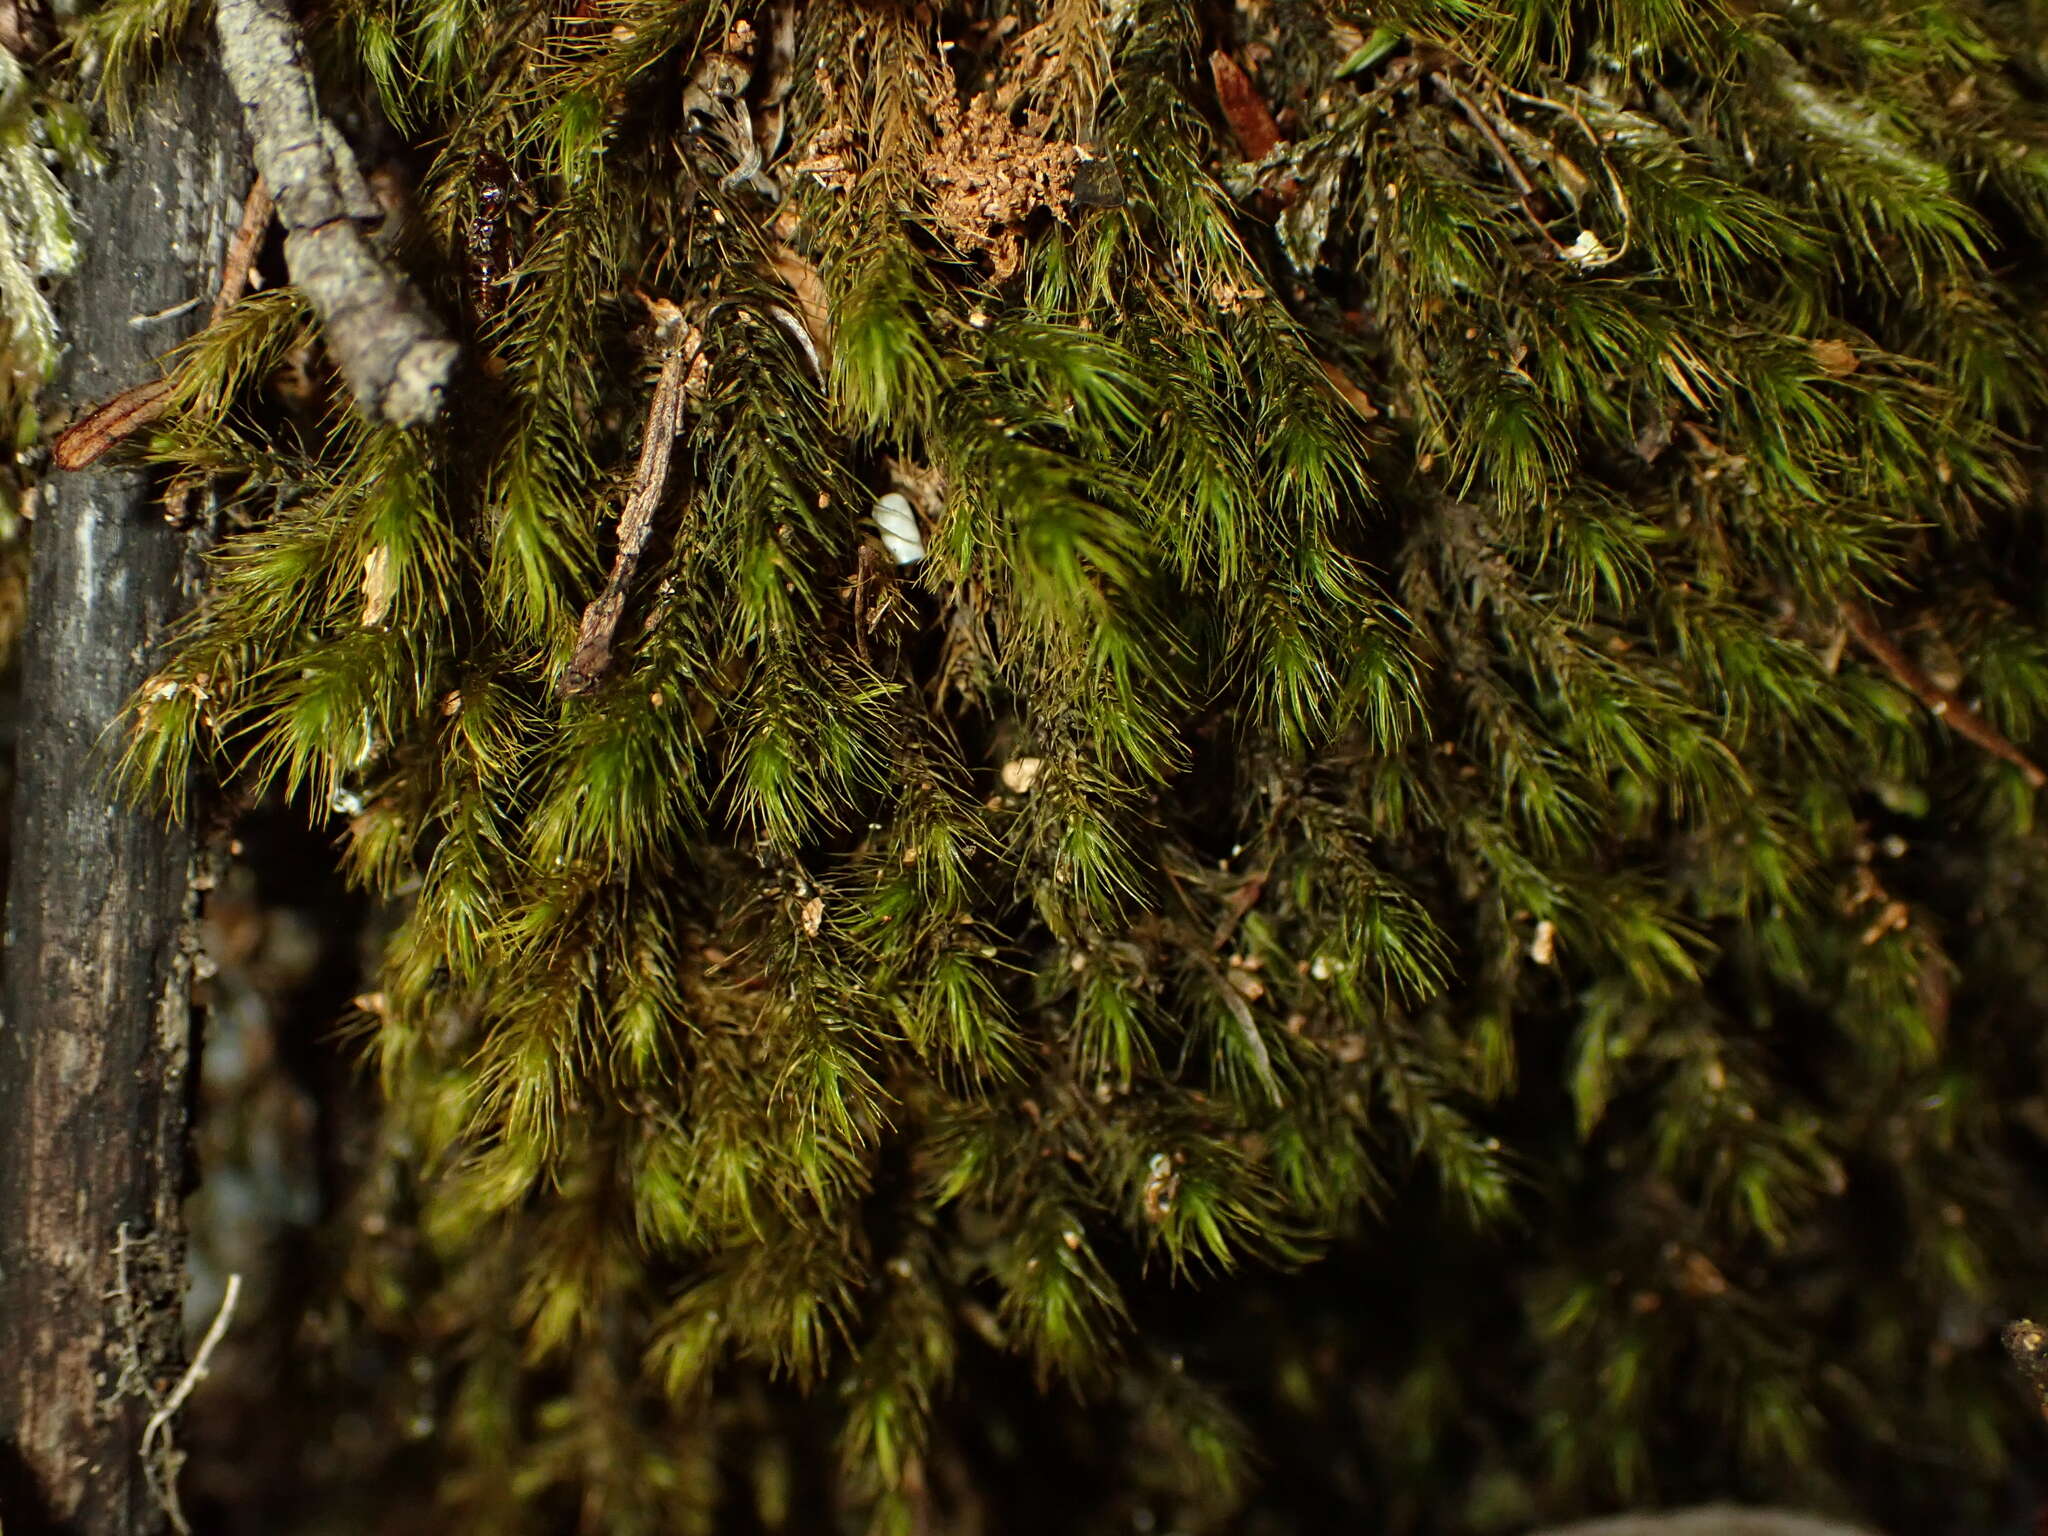 Image of <i>Echinodiopsis hispida</i>